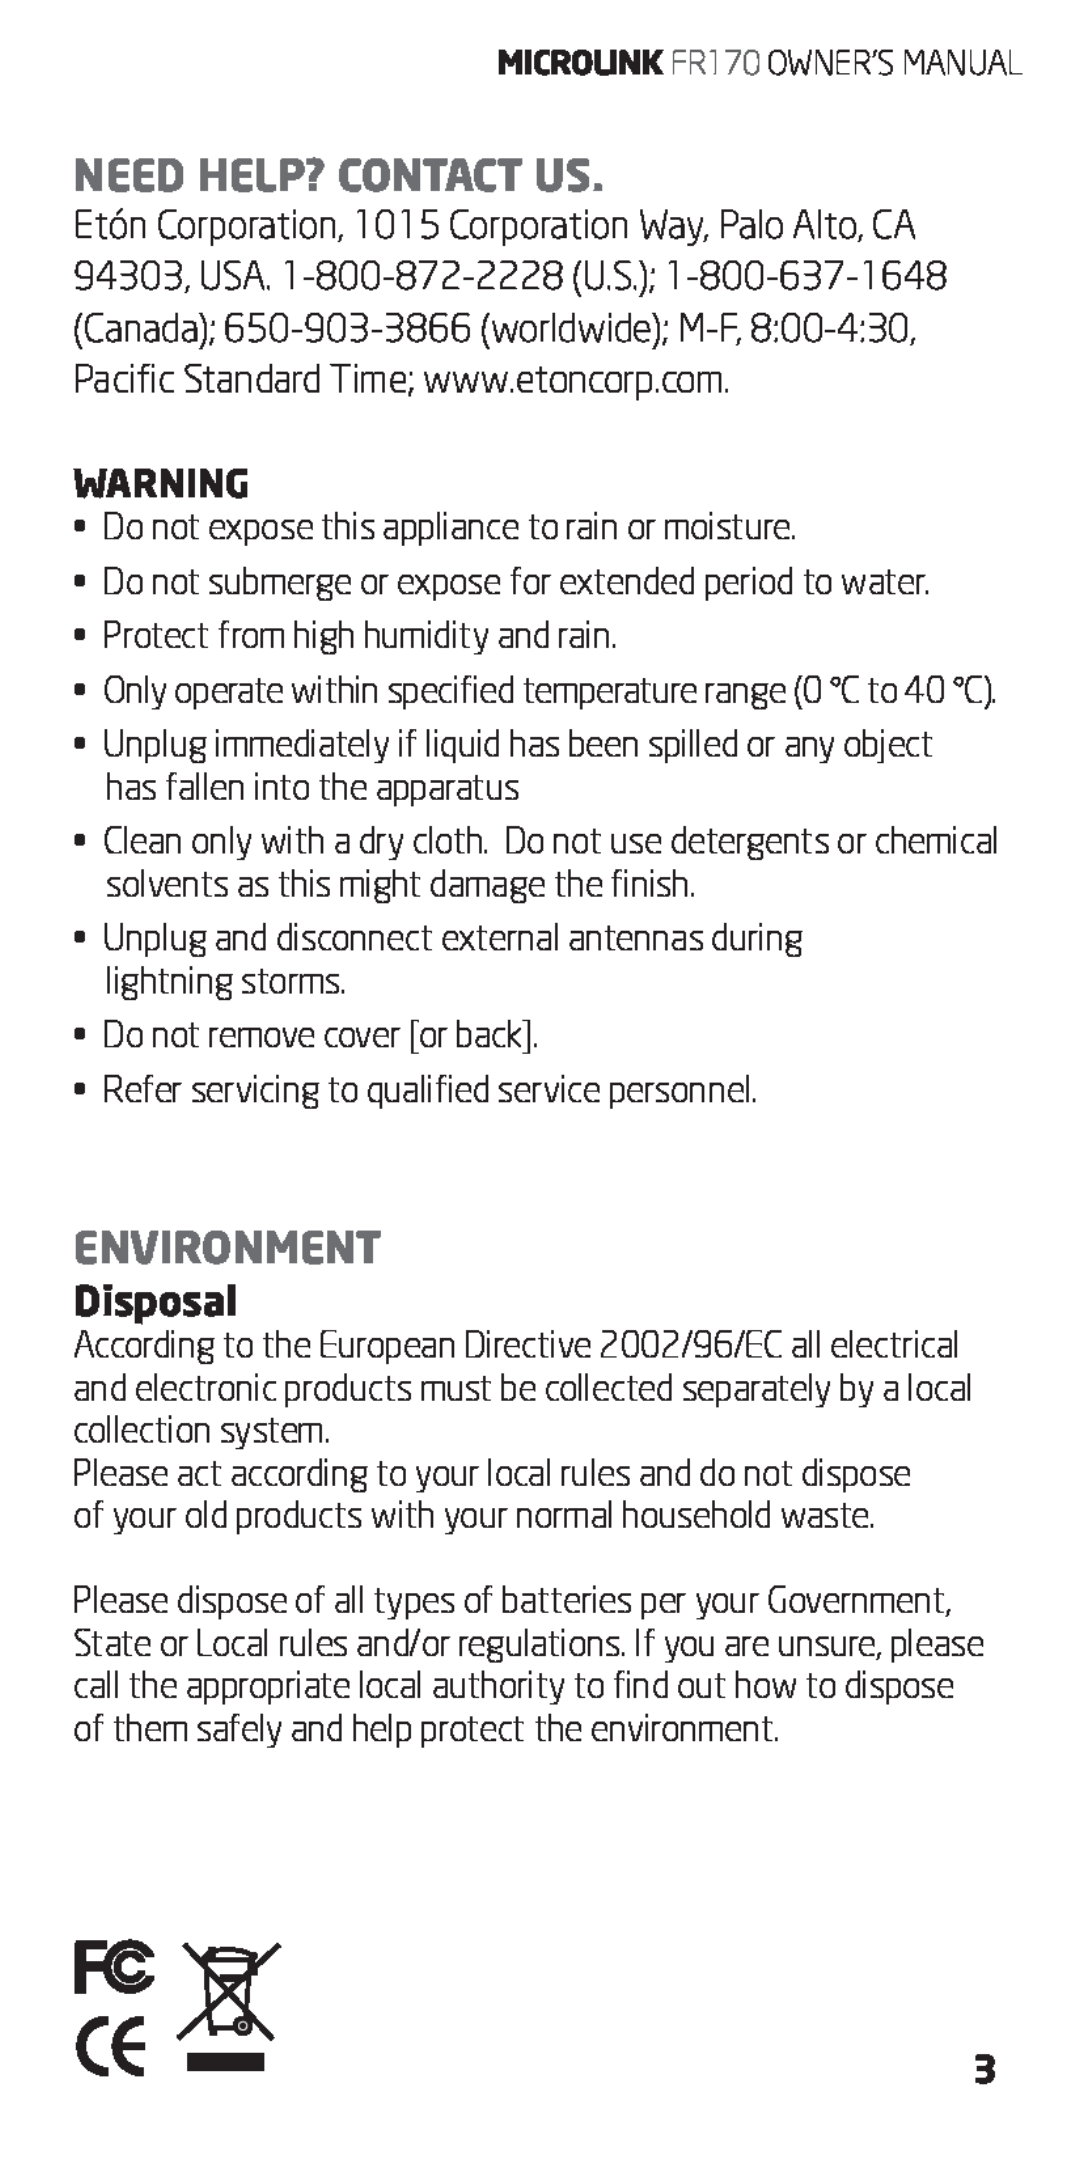 Eton FR170 owner manual Need Help? Contact Us, Environment, Disposal 